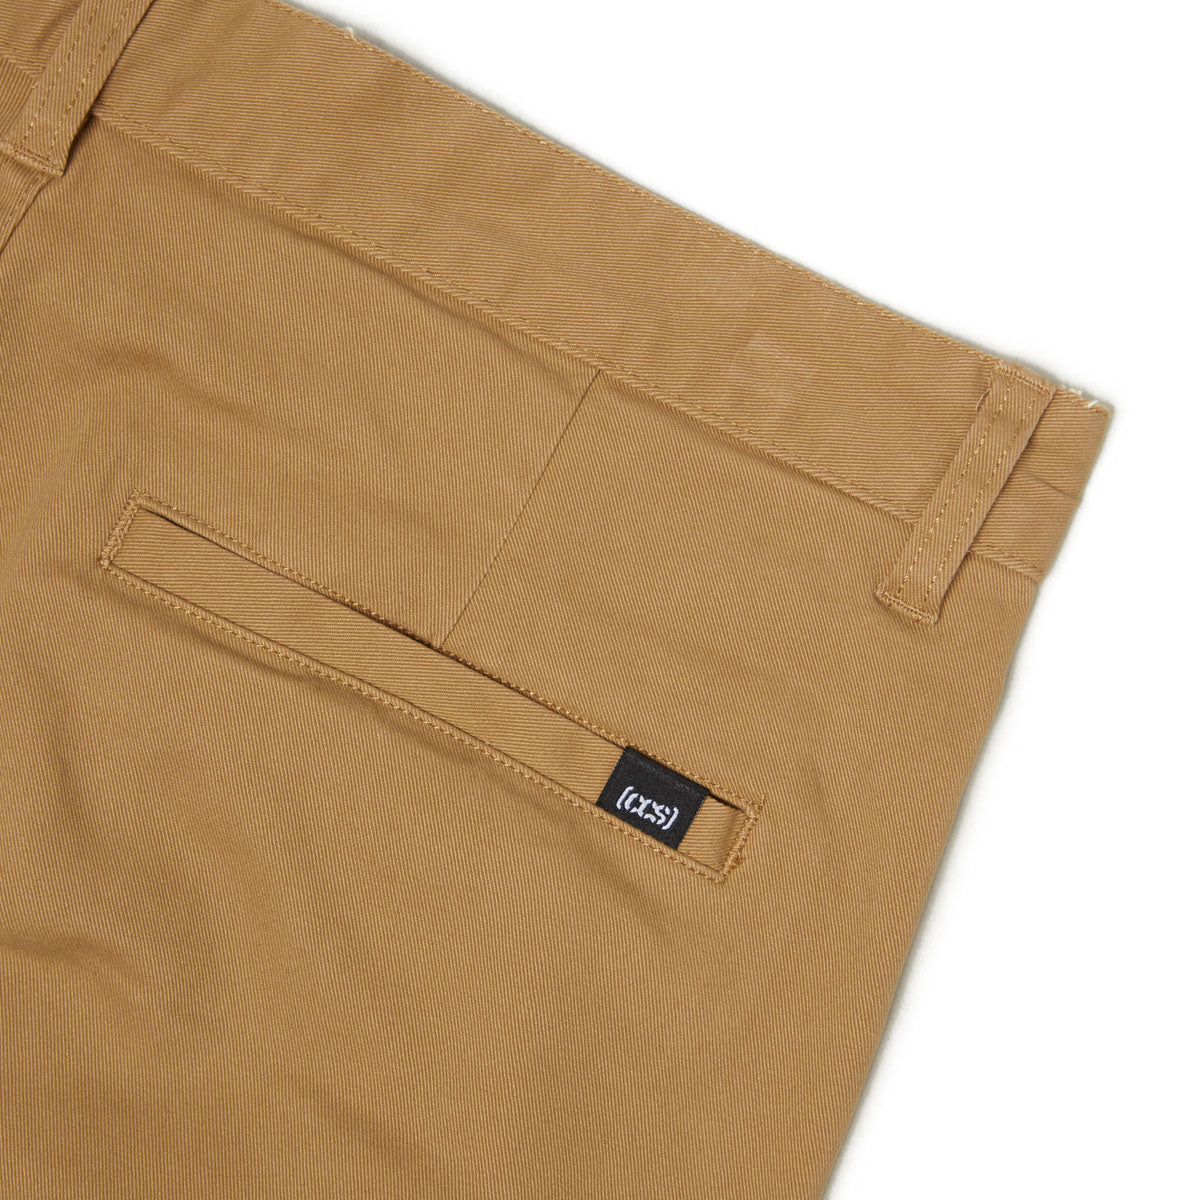 CCS Standard Plus Straight Chino Pants - Khaki image 6